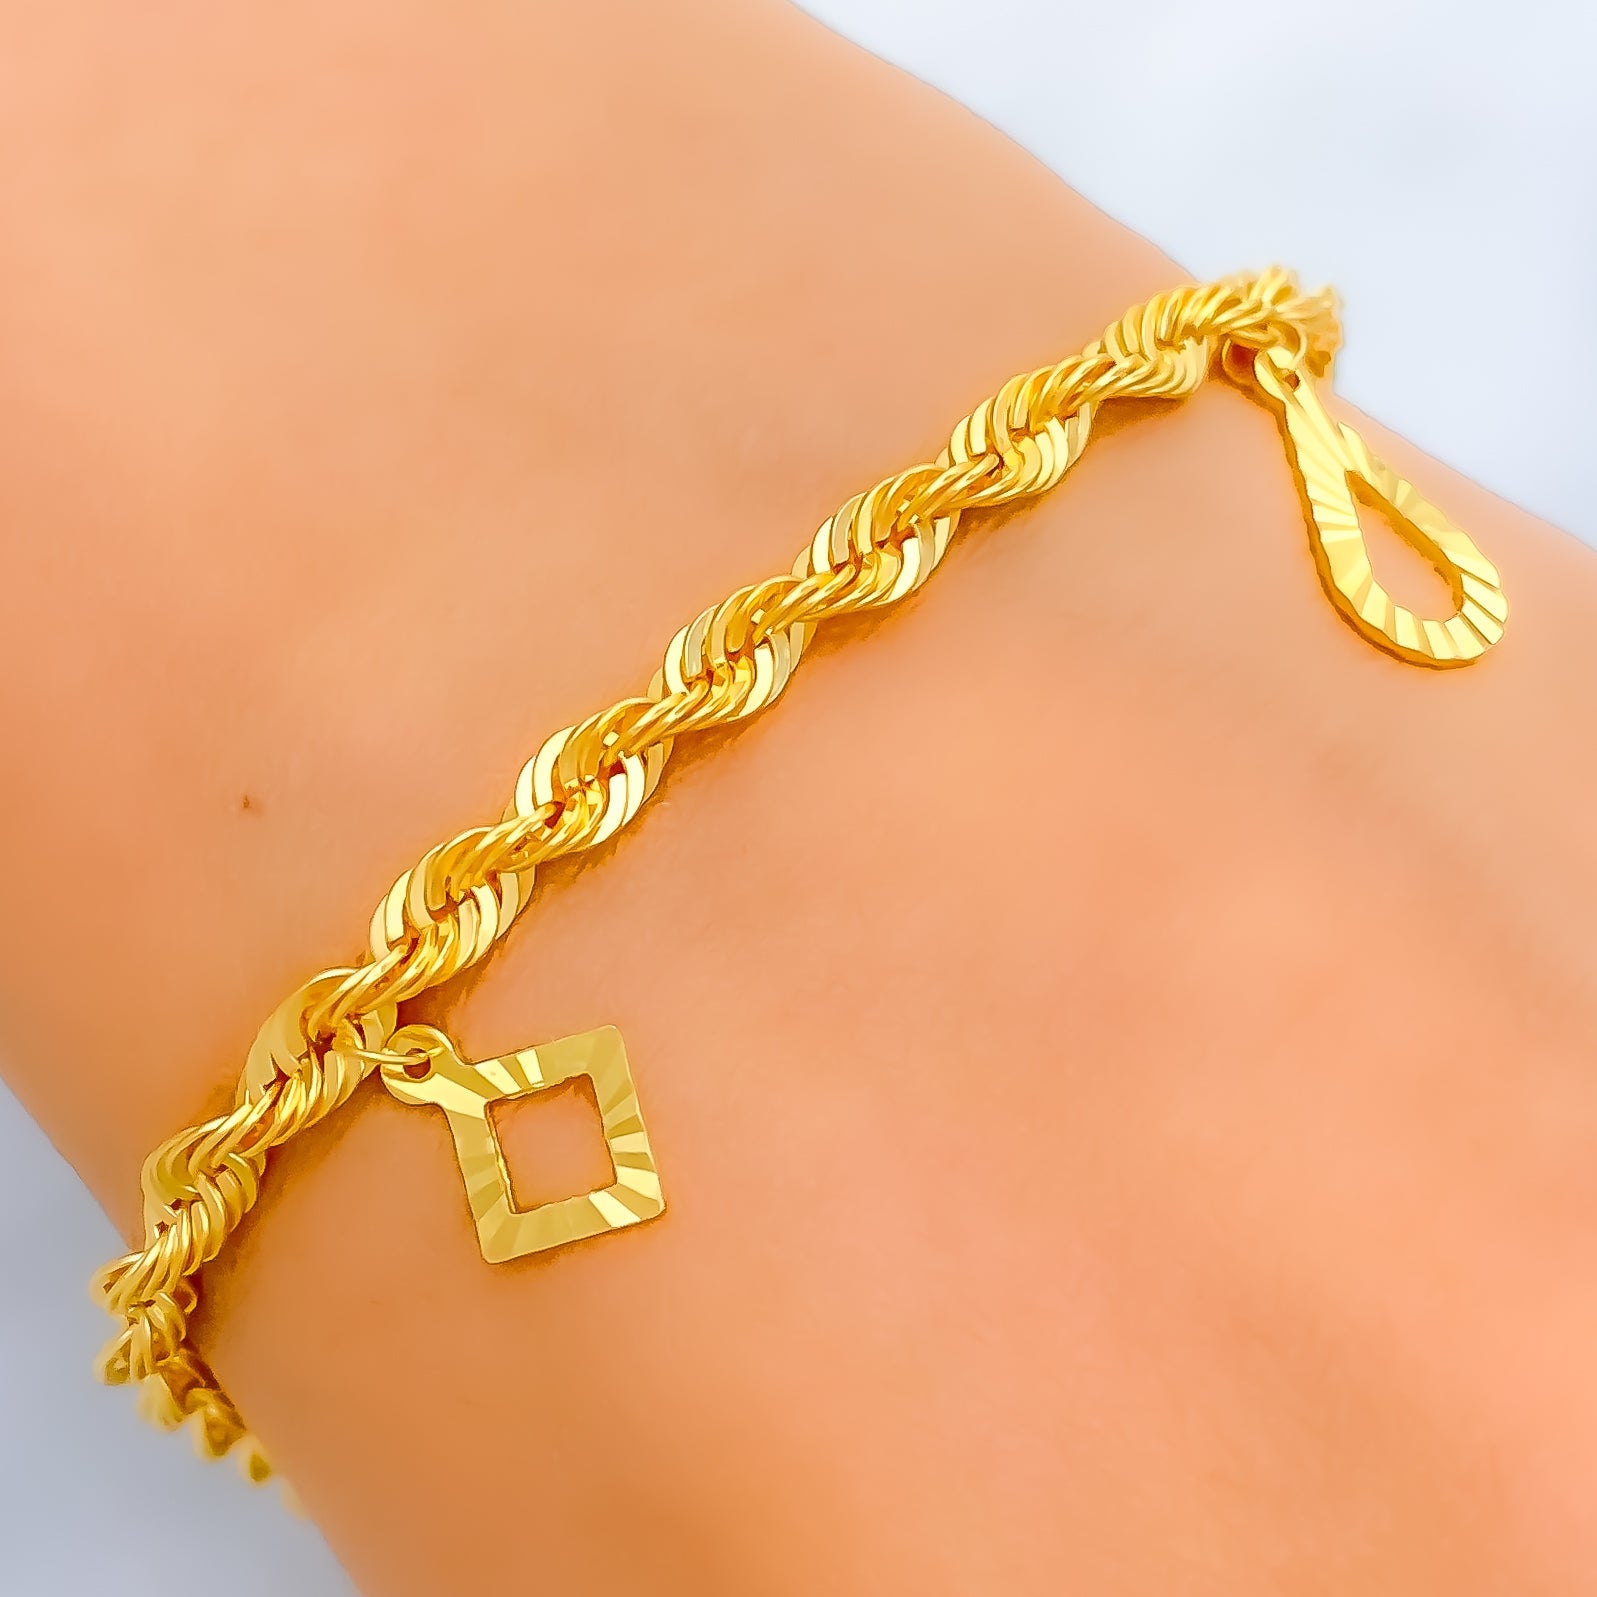 Gold Charm bracelet - BrLa6716 - 22k Gold ladies bracelet with beautiful  charms hanging.